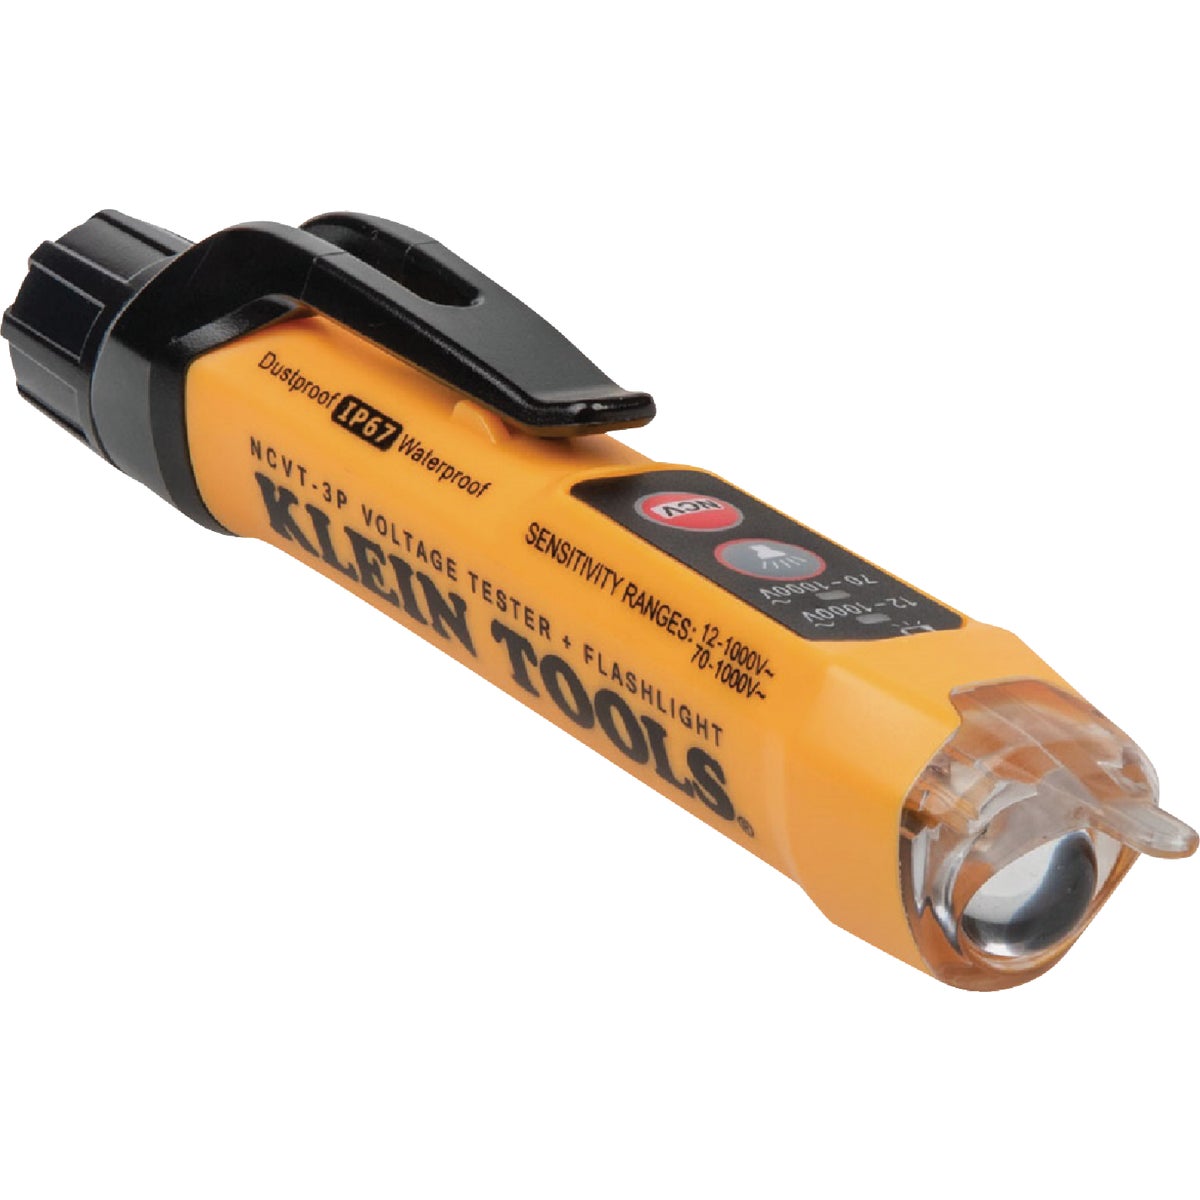 Klein Dual Range Non-Contact Voltage Tester with Flashlight